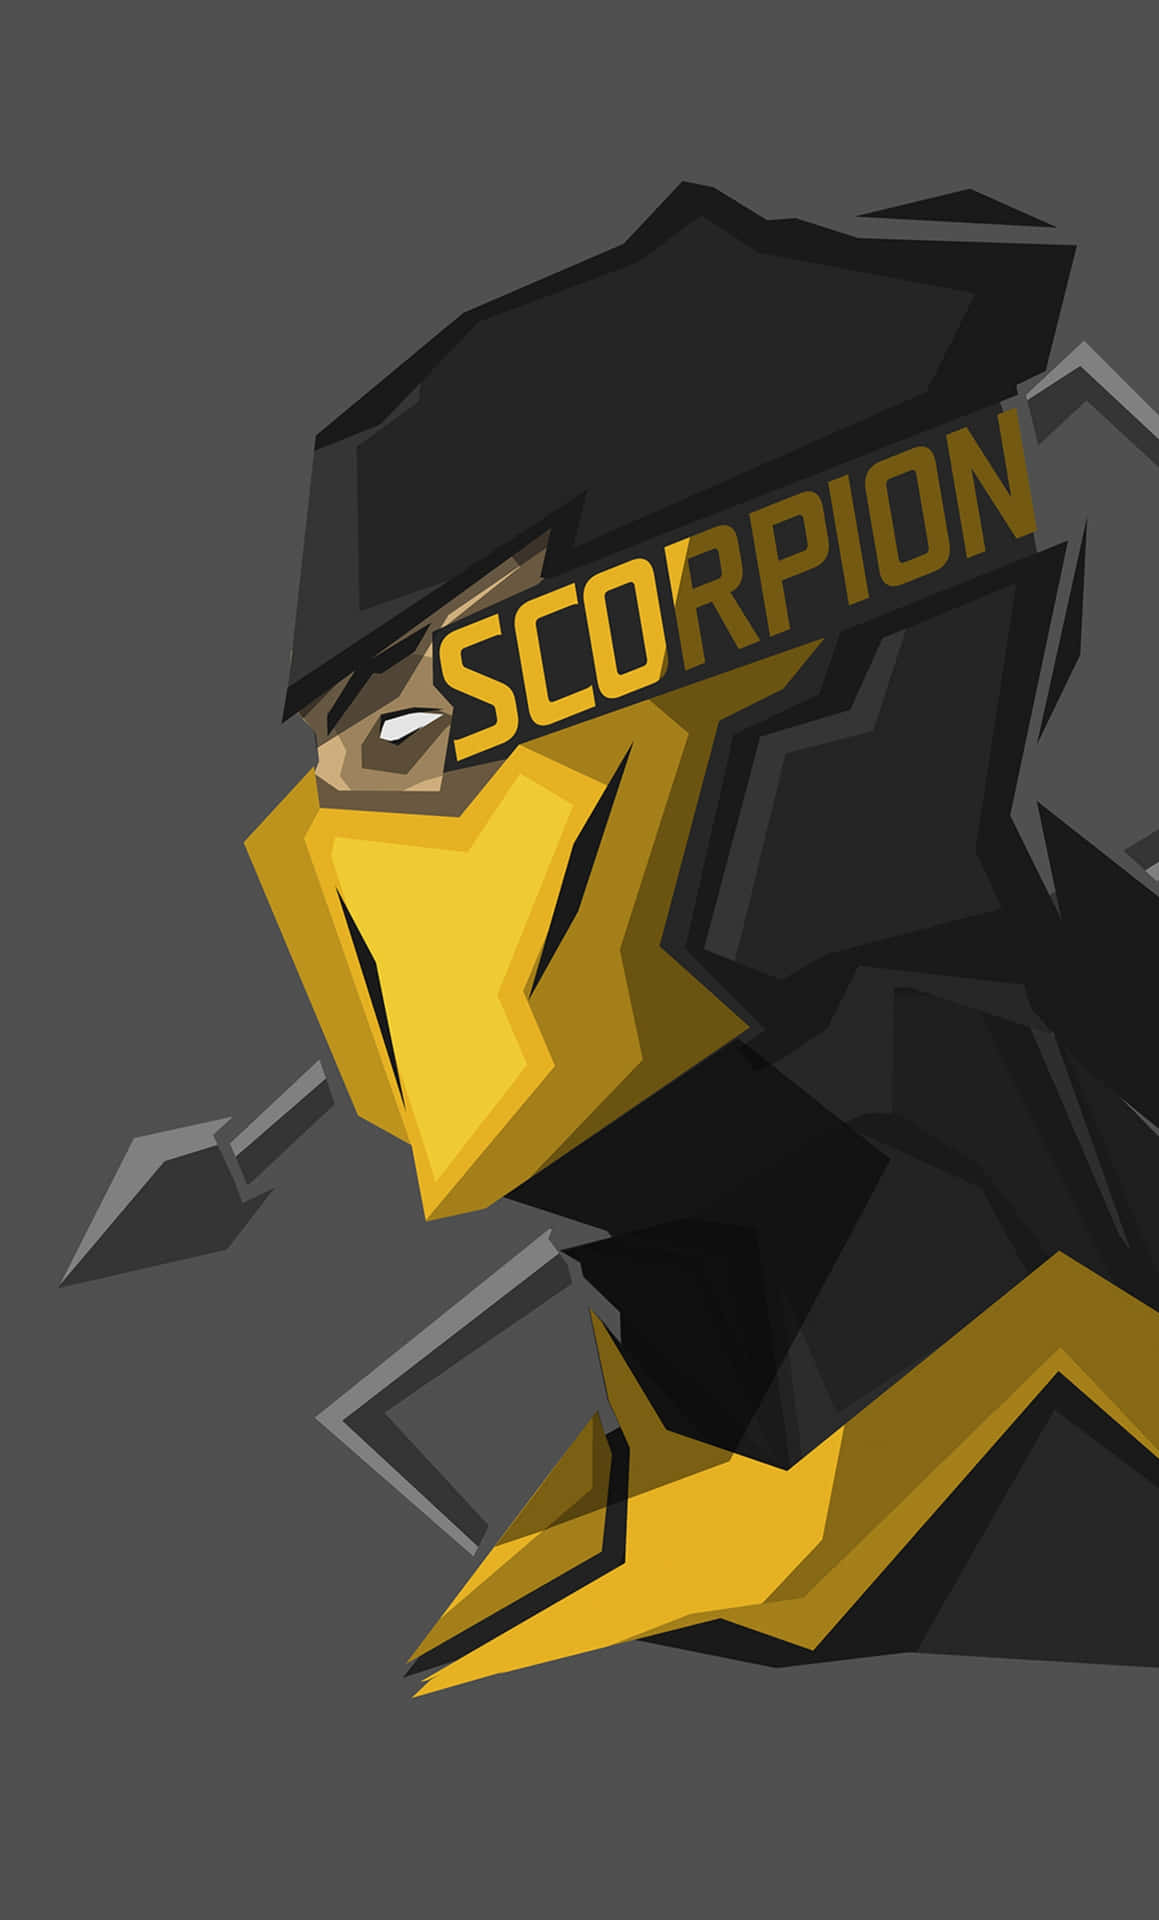 Scorpion in Mortal Kombat - A Hero to Lead the Fight Wallpaper